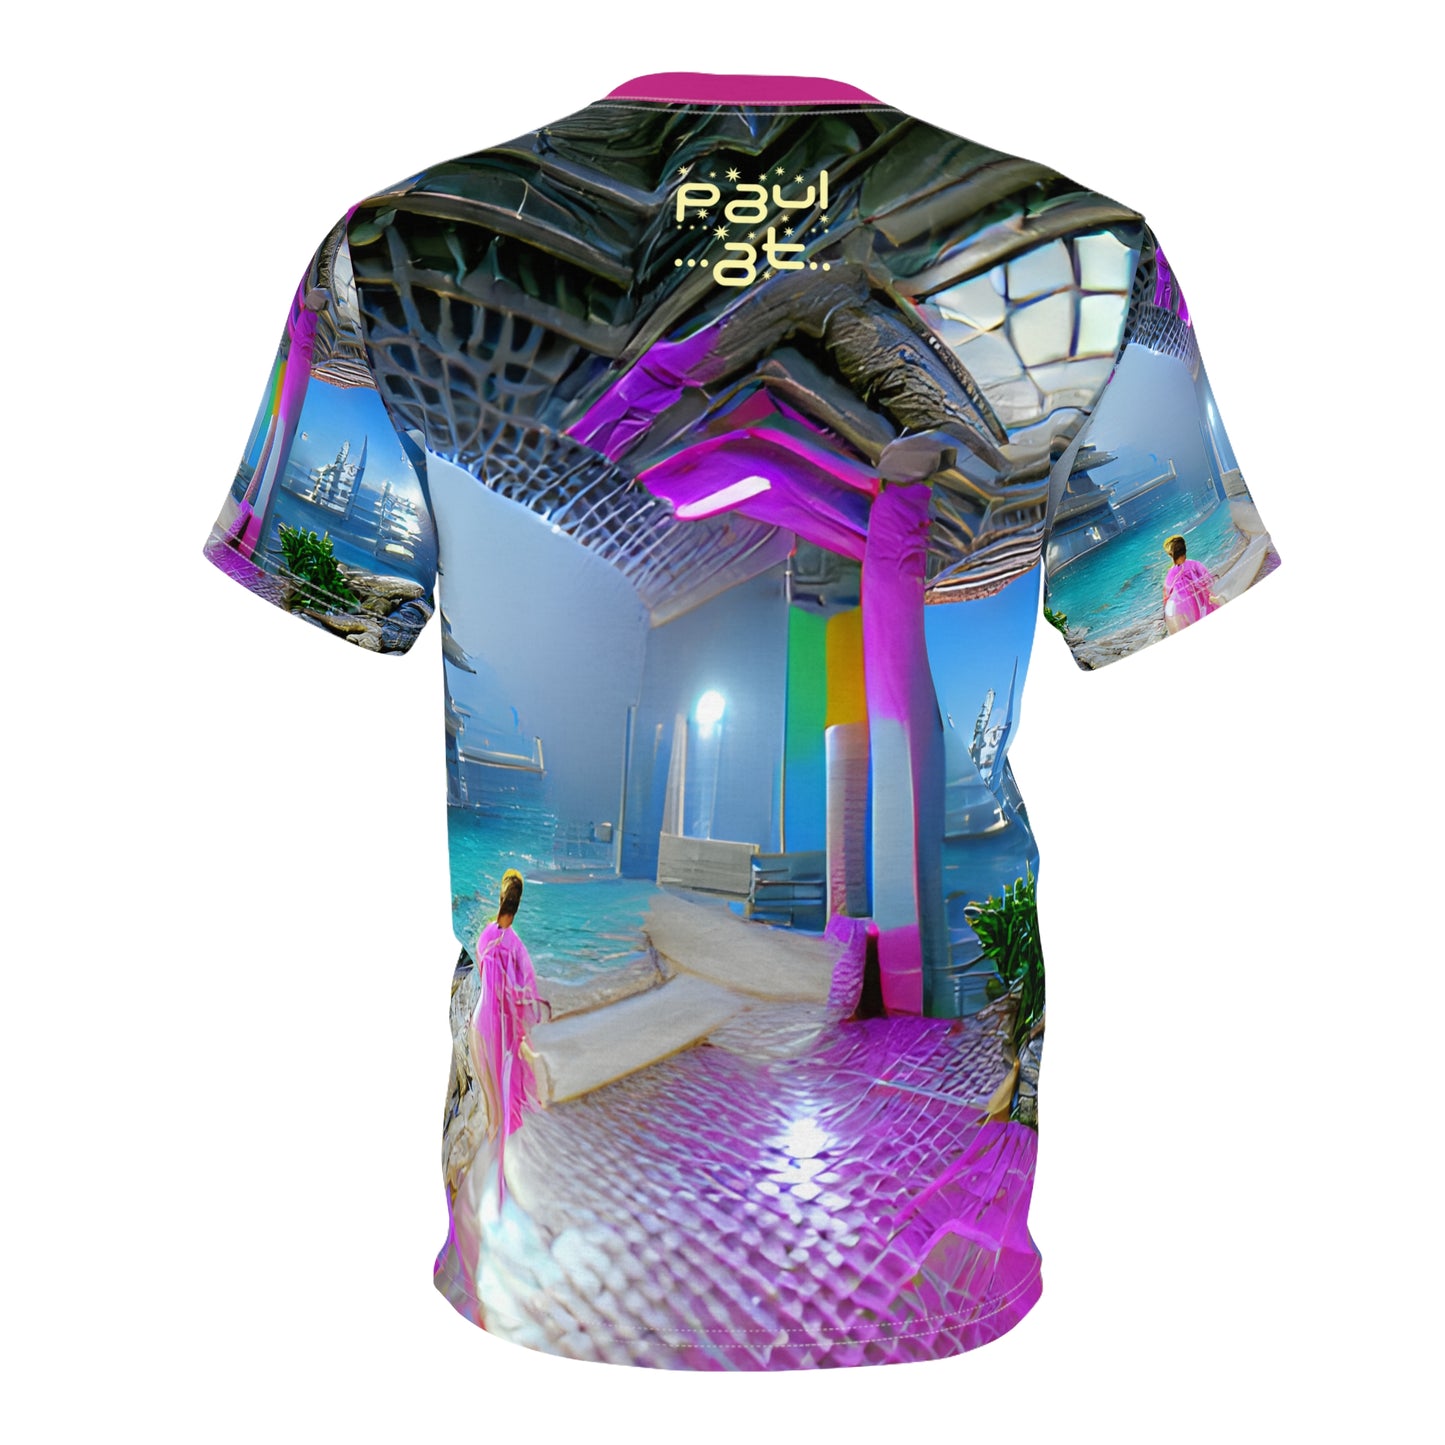 Future Visions Unisex T-Shirt